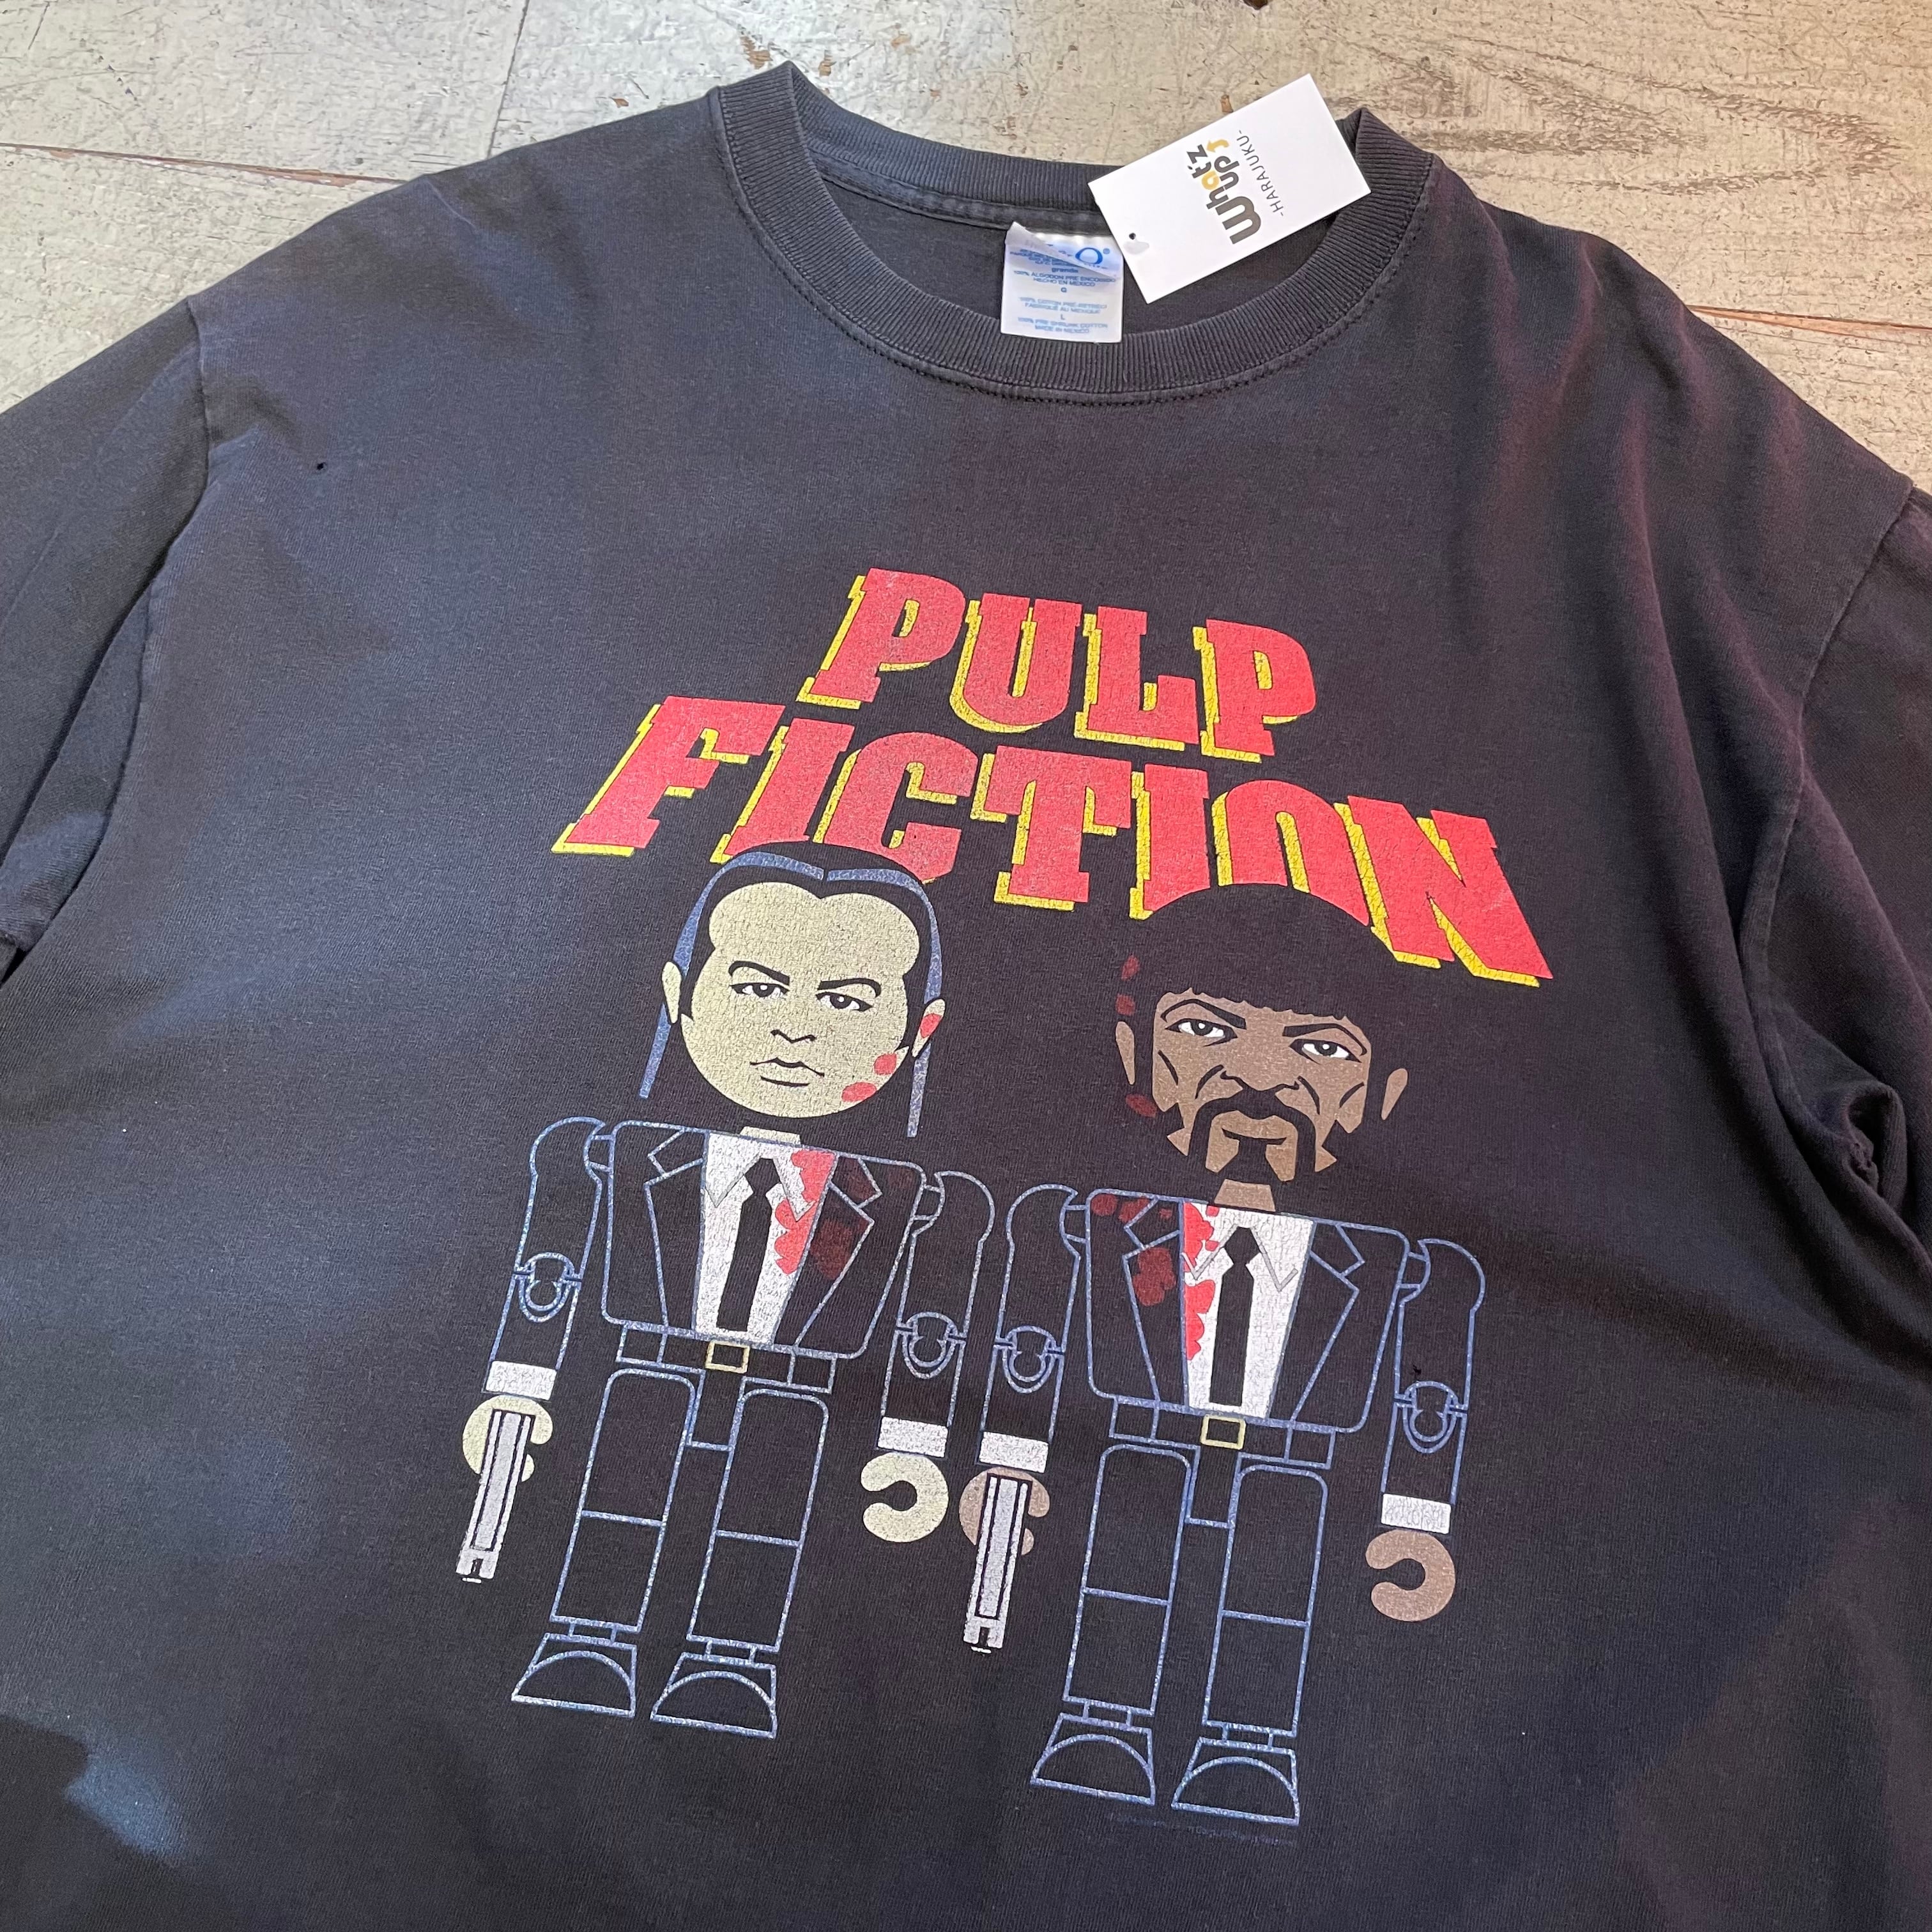 00s PULP FICTION T-shirt | What'z up